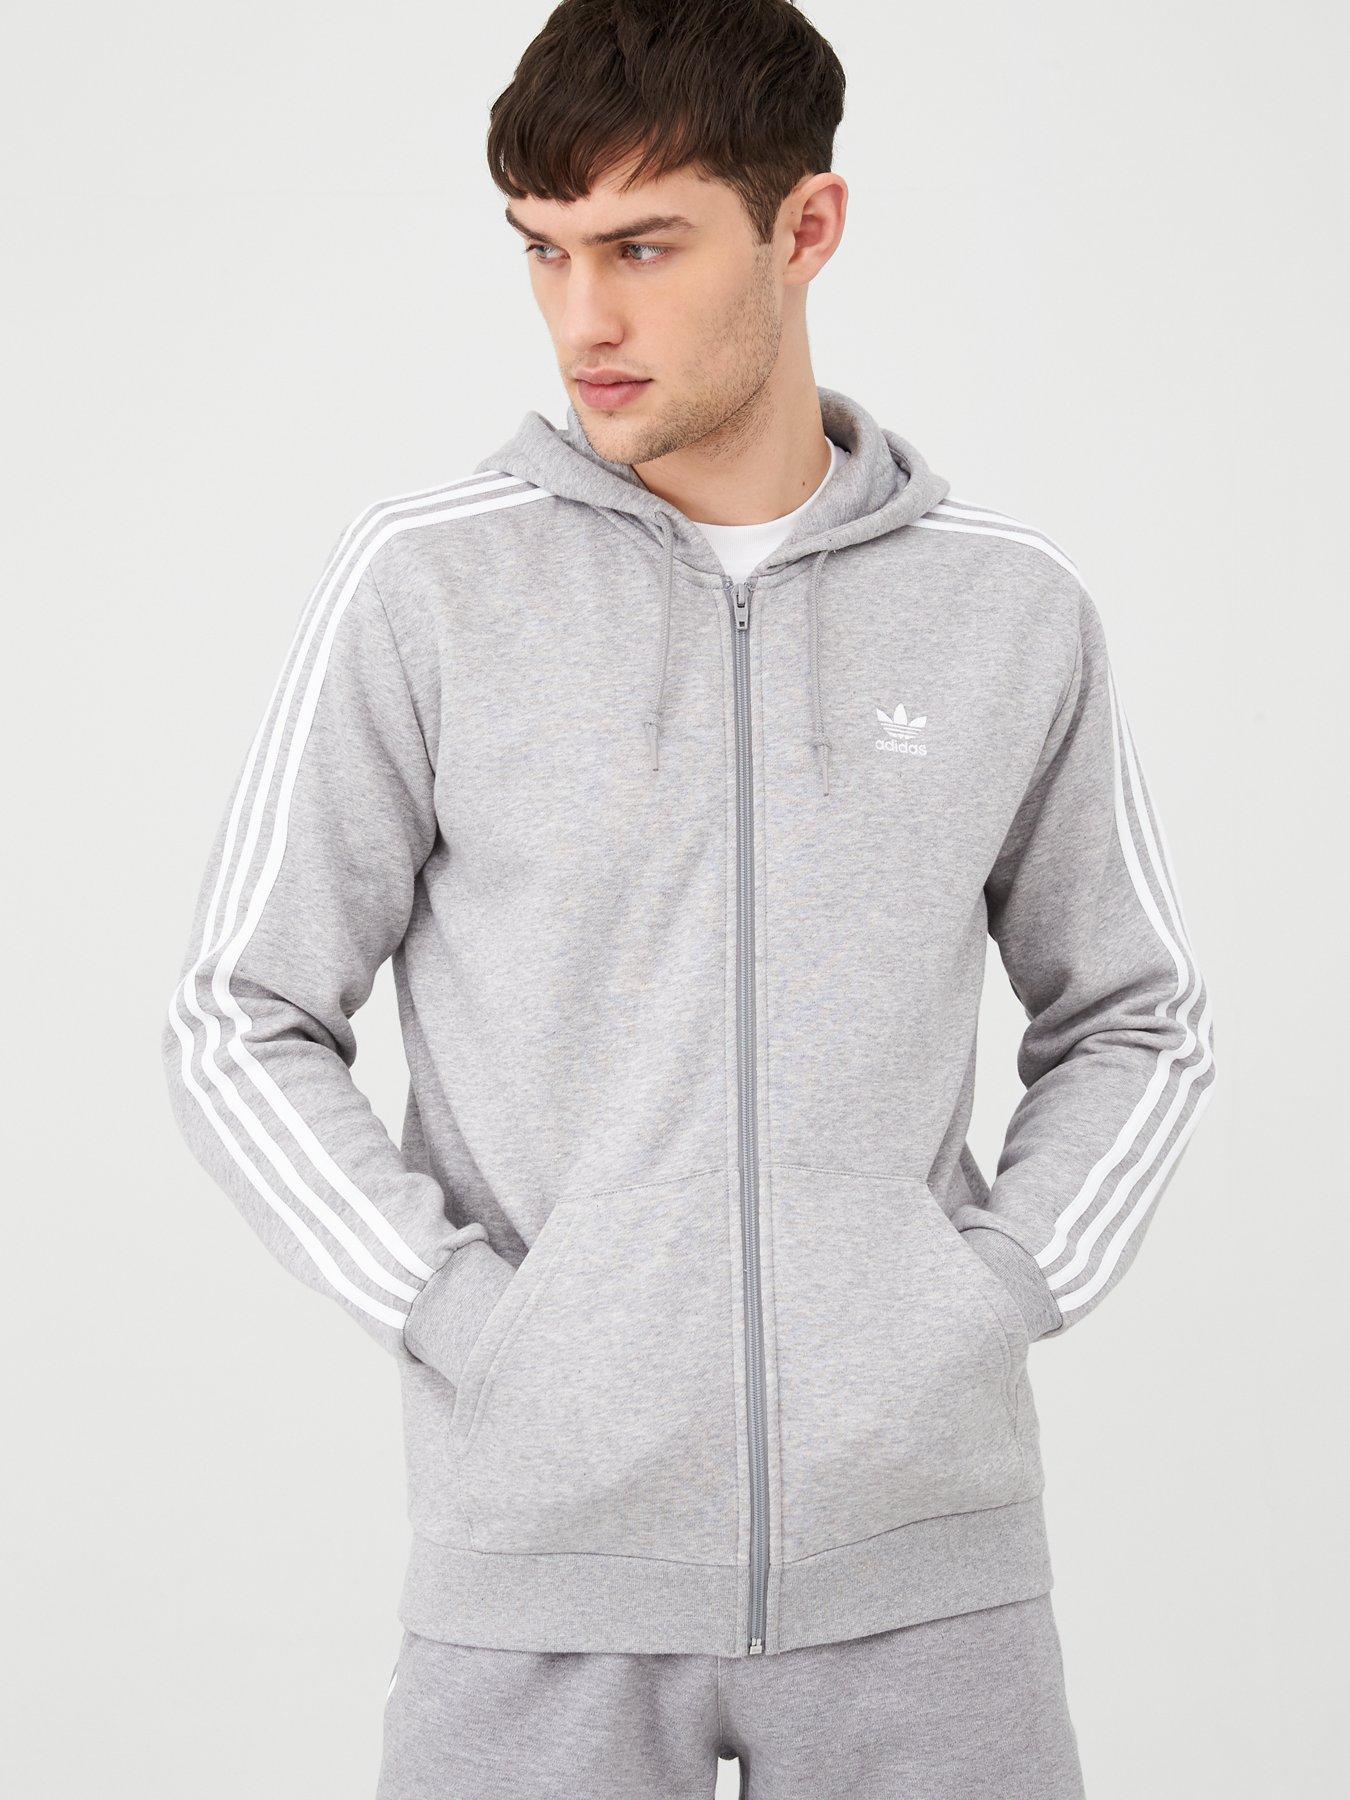 adidas 3 stripes hoodie grey